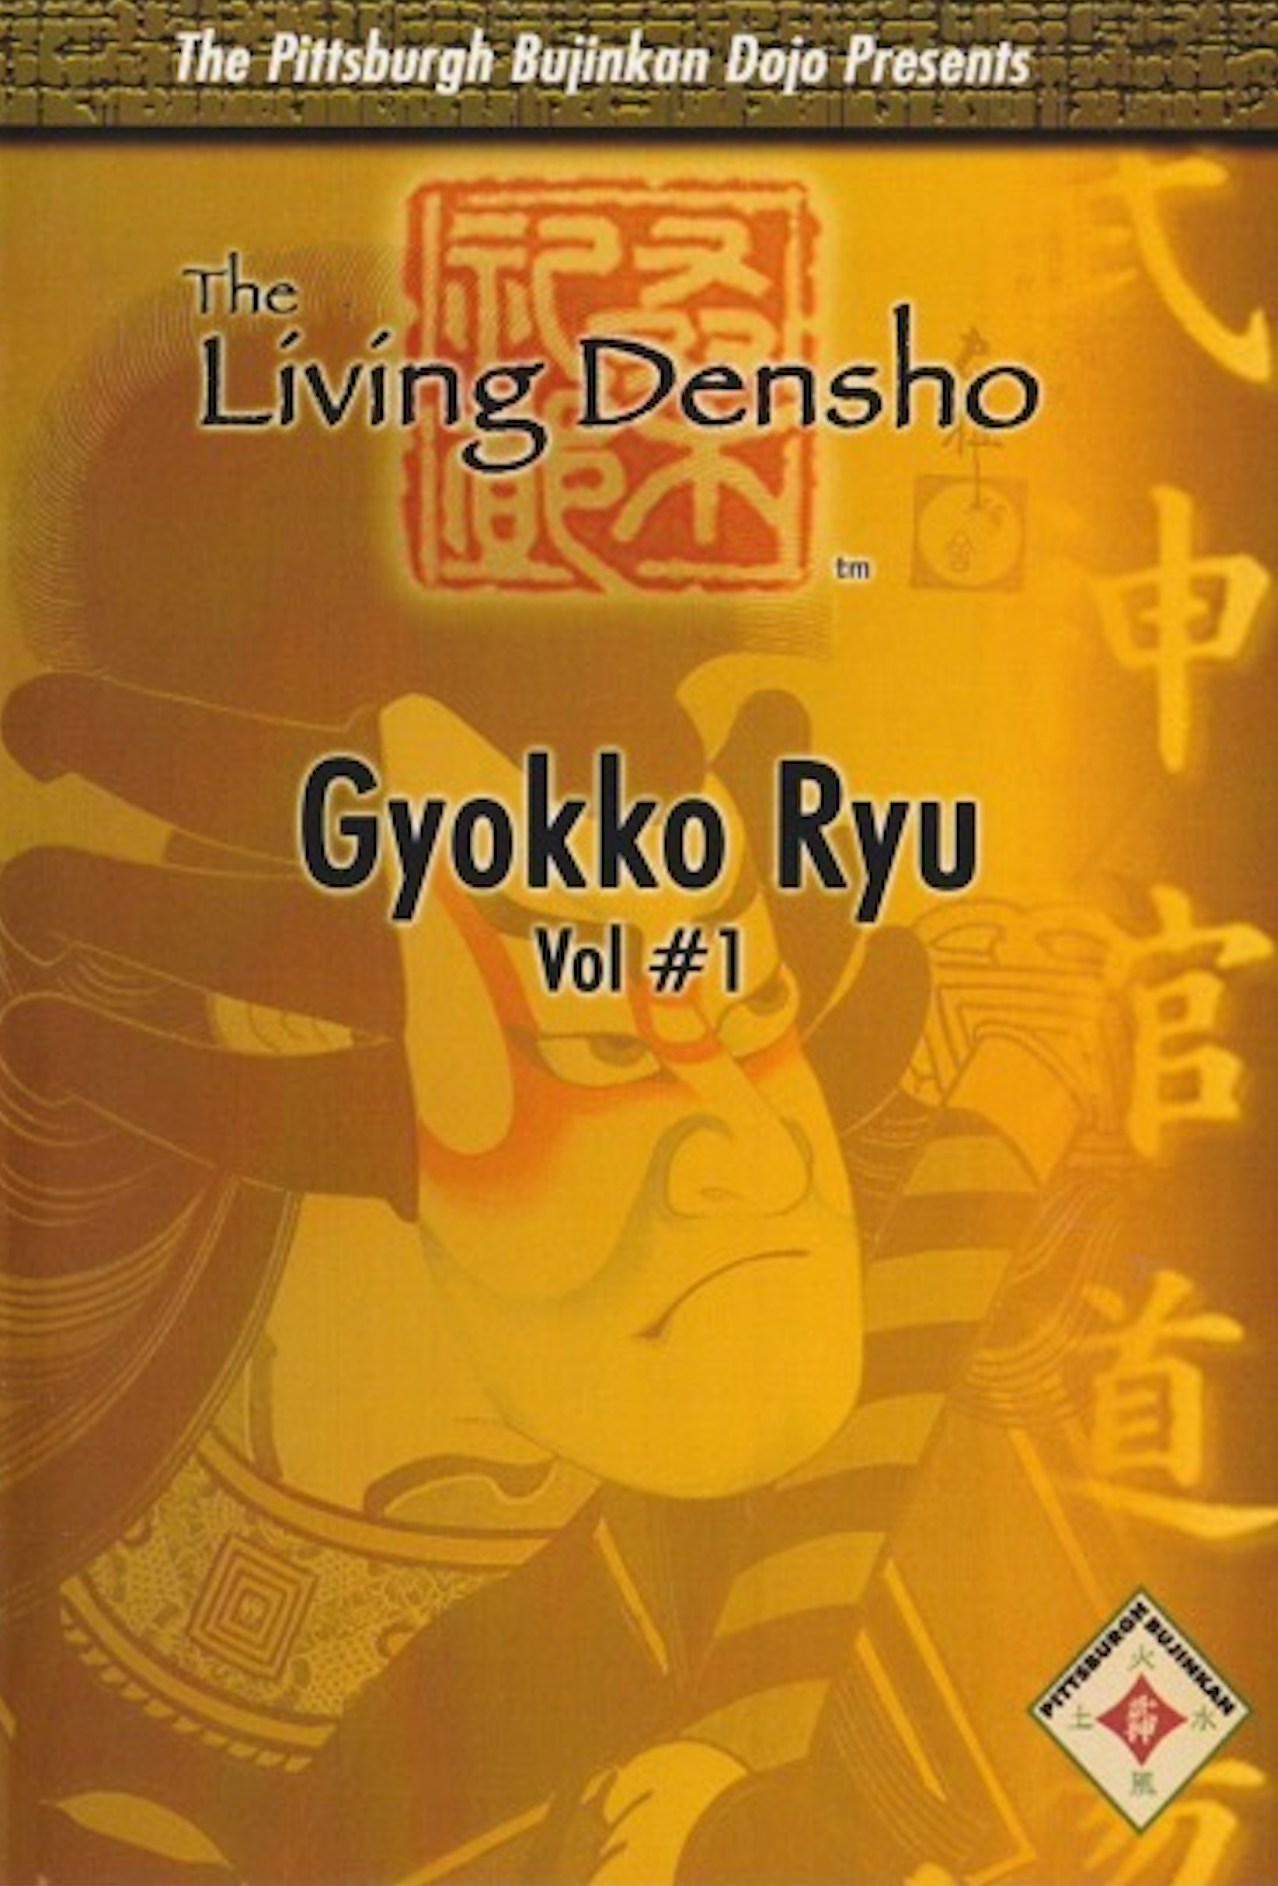 The Living Densho: Gyokko Ryu DVD by David Fetterman & Brent Earlwine (Preowned)